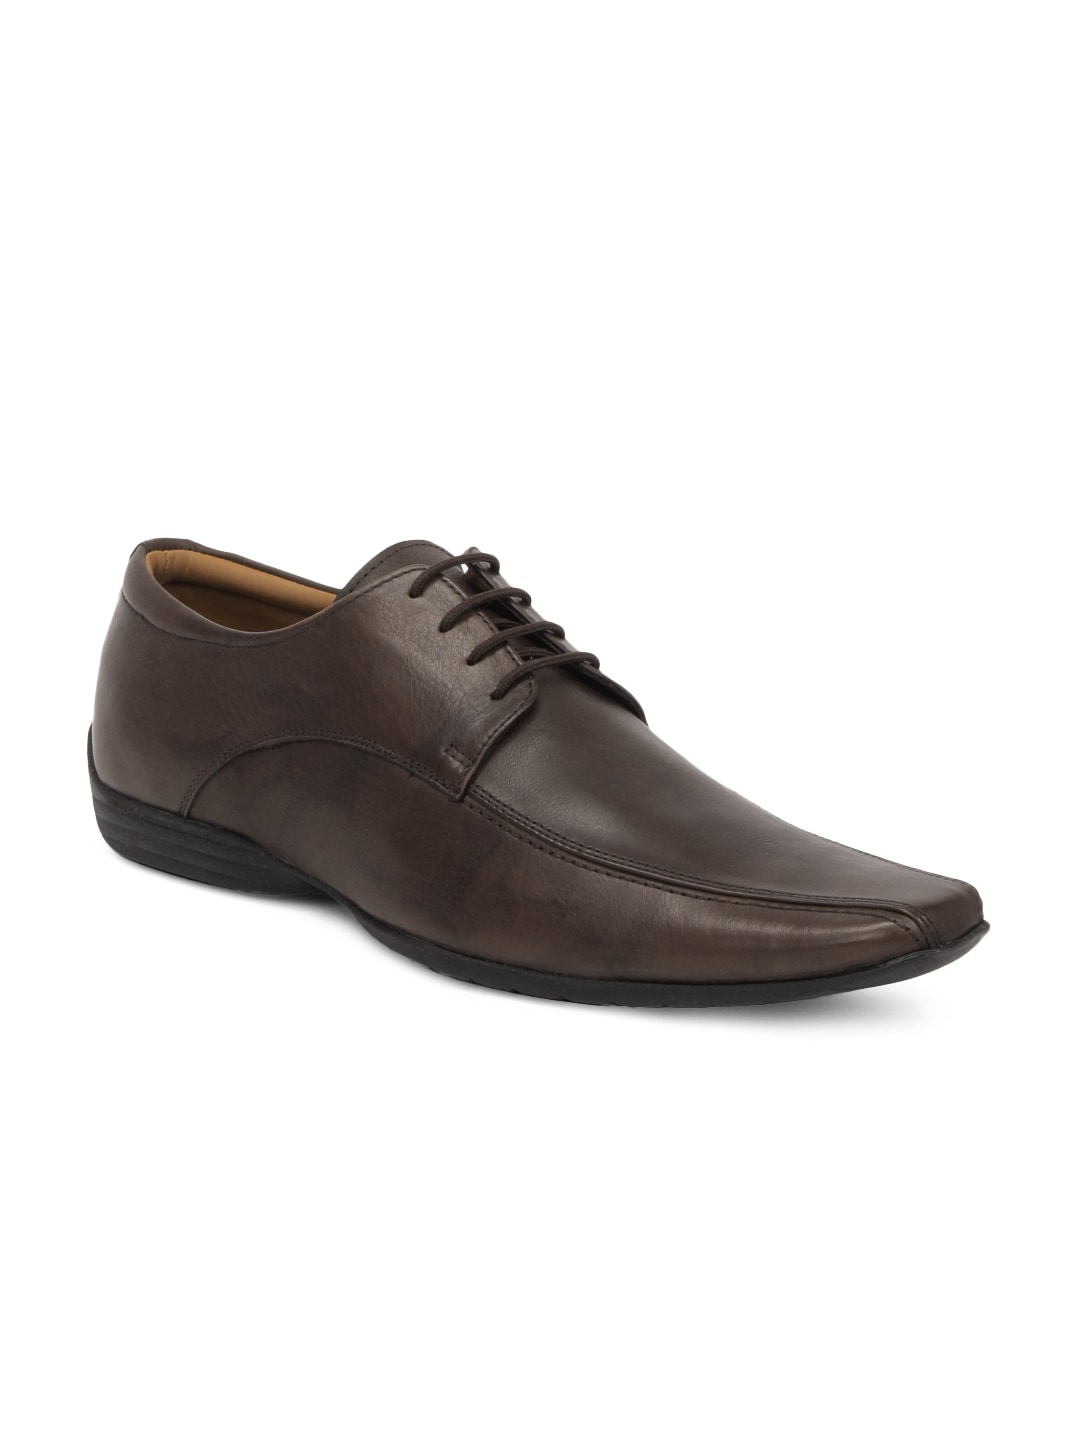 Carlton London Men Brown Formal Shoes